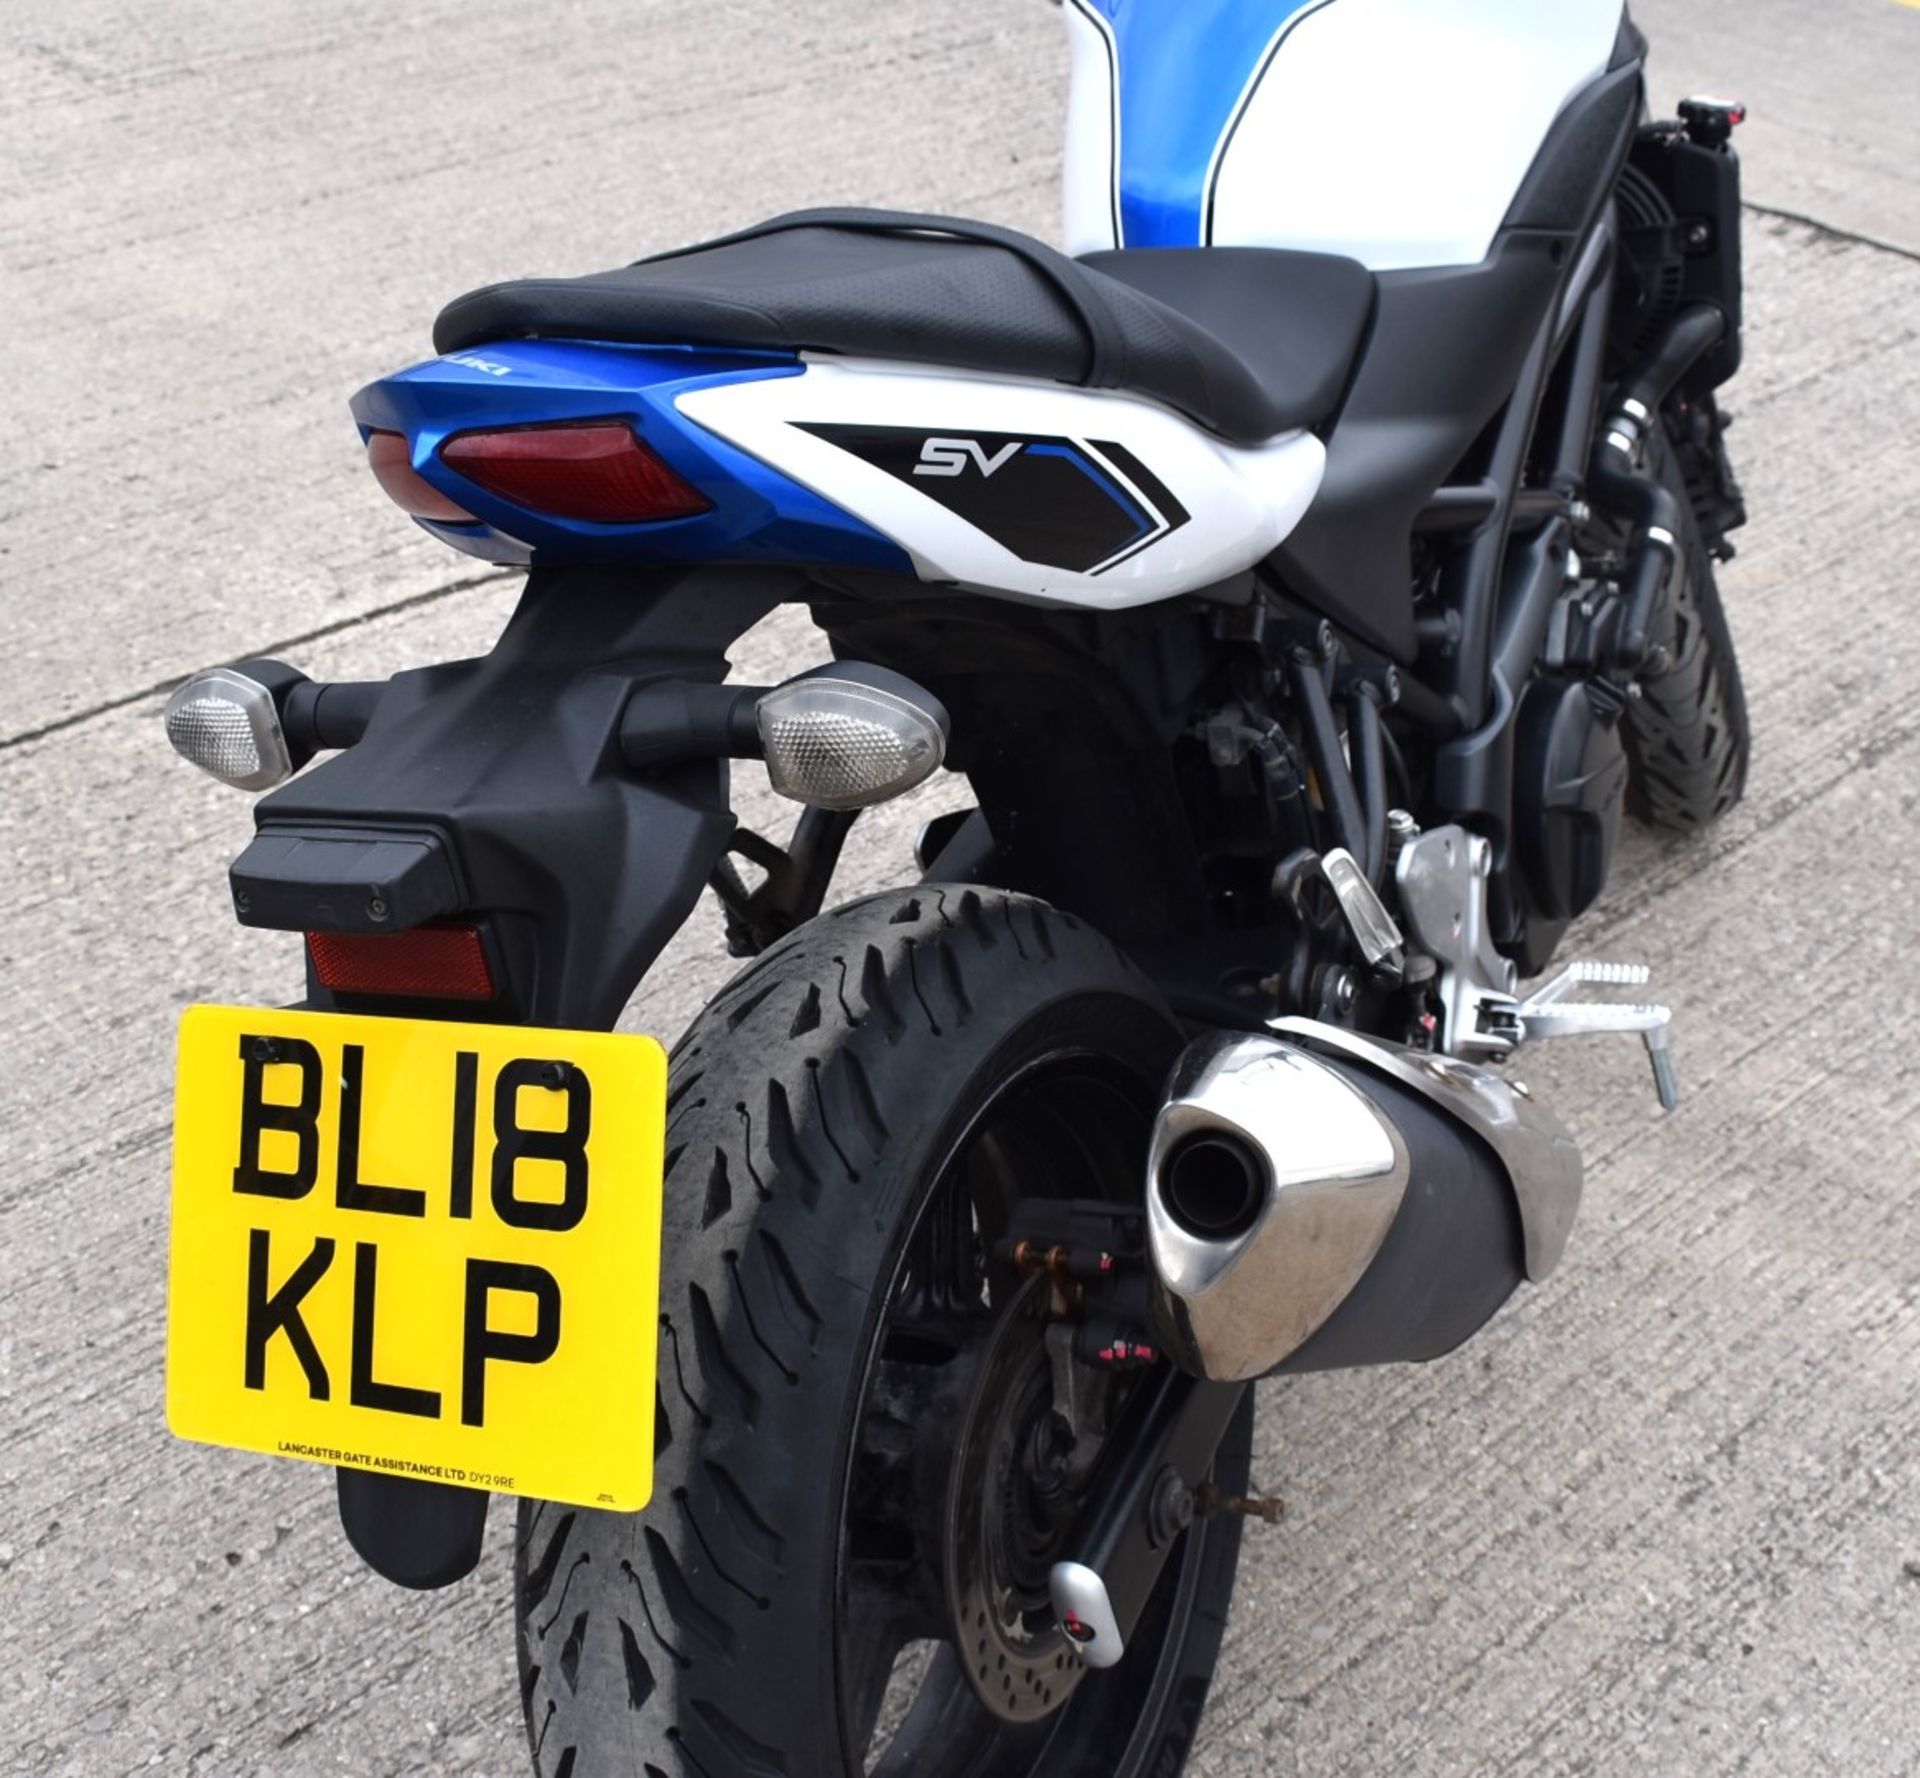 2018 Suzuki SV650 Motorcycle - BL18 KLP - Mileage: 21,098 - 4 Months MOT - Image 32 of 37